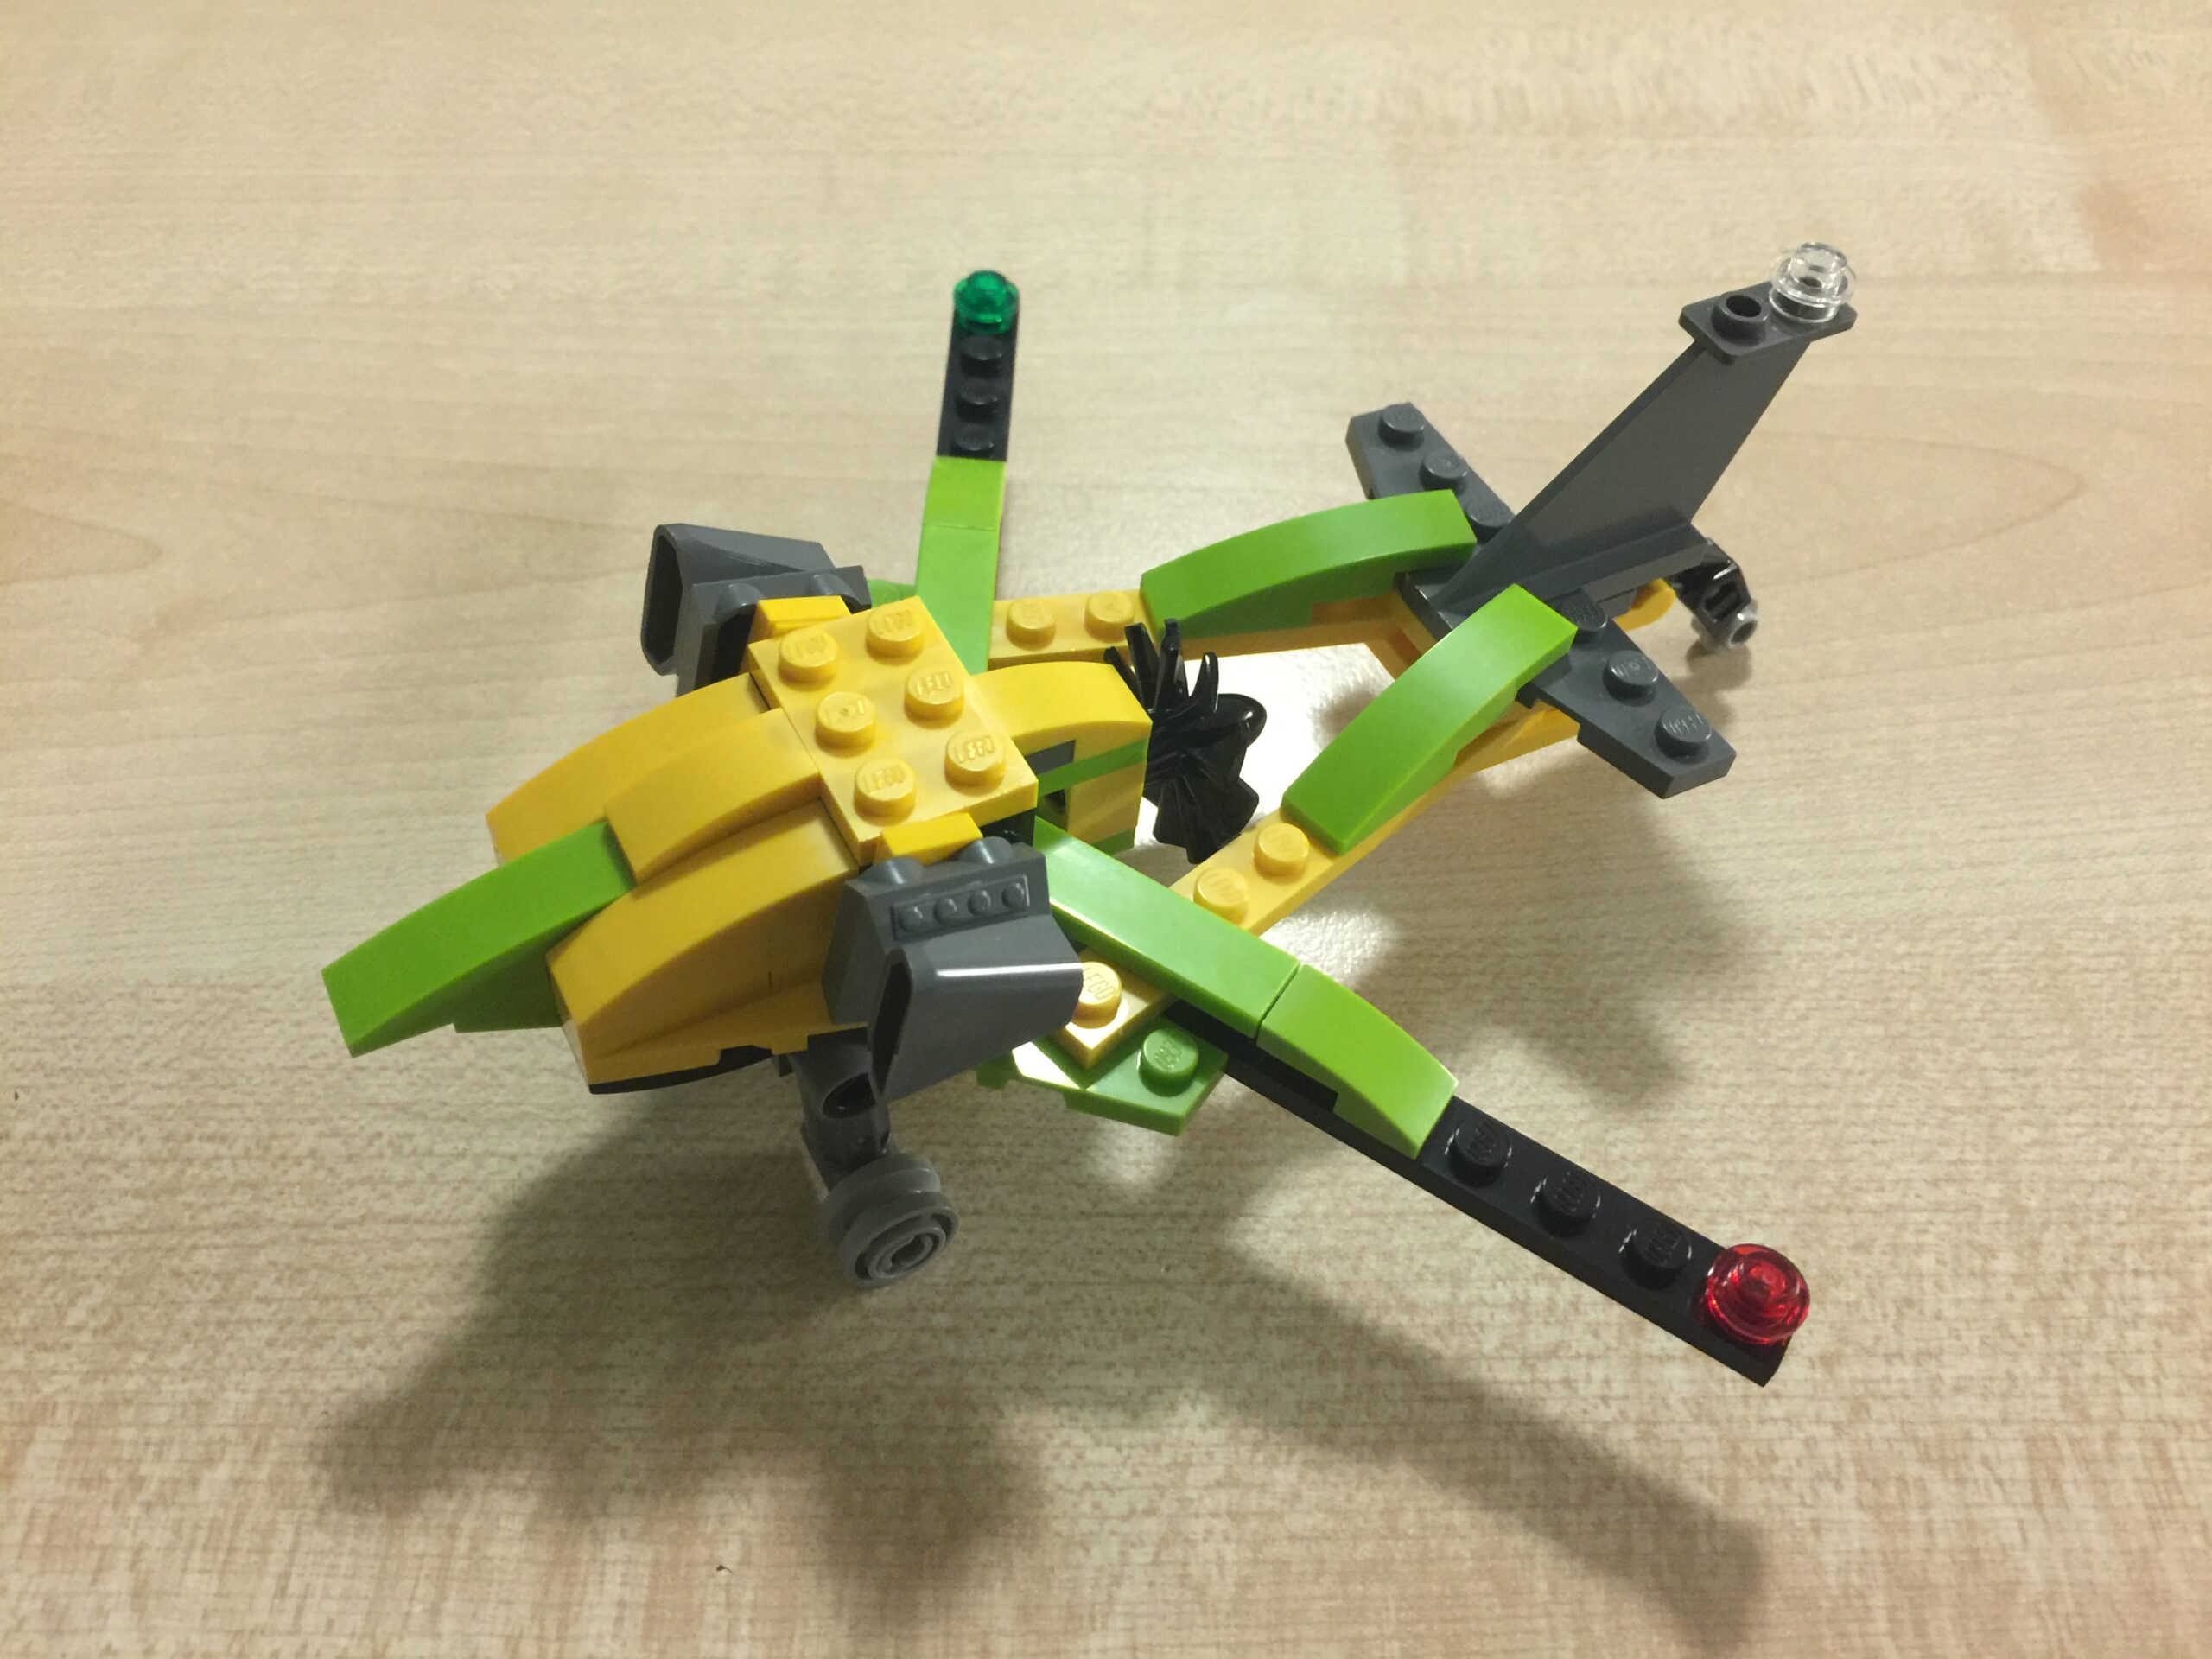 Lego plane